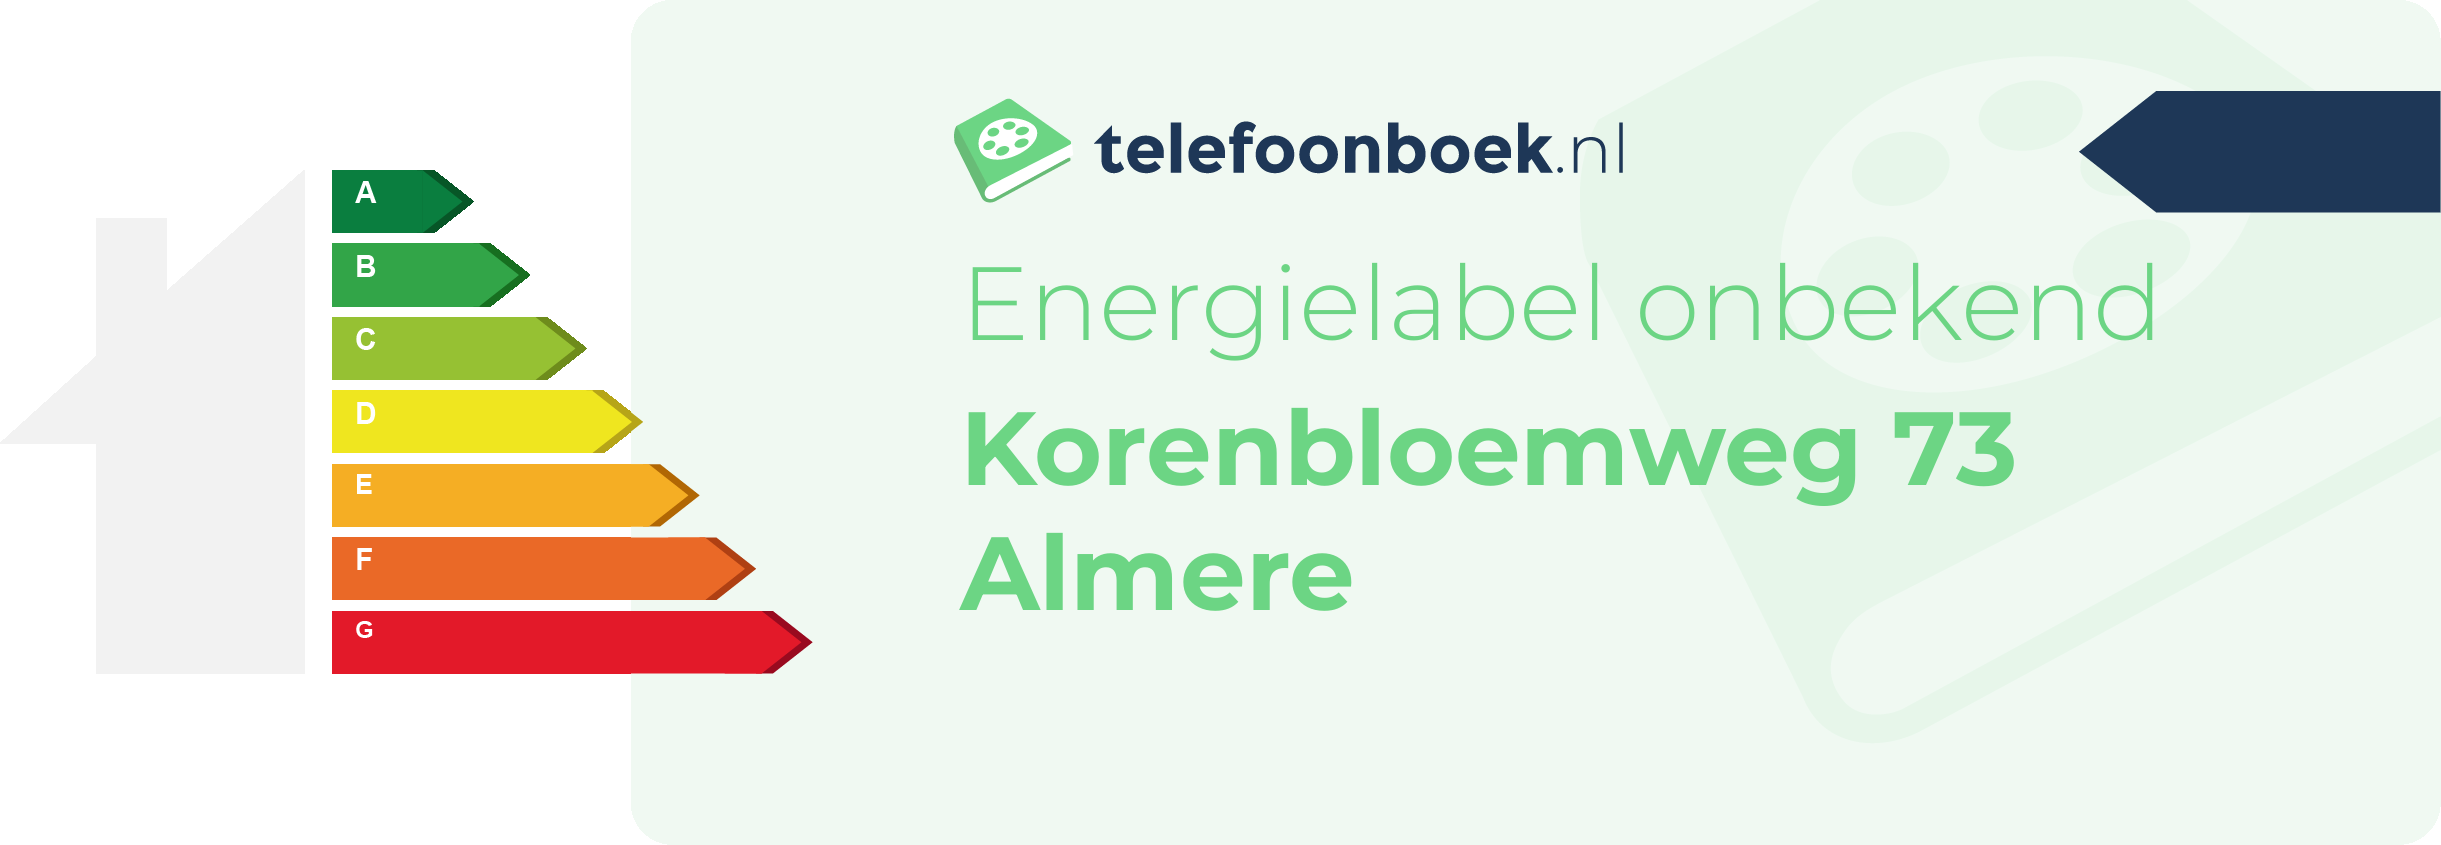 Energielabel Korenbloemweg 73 Almere